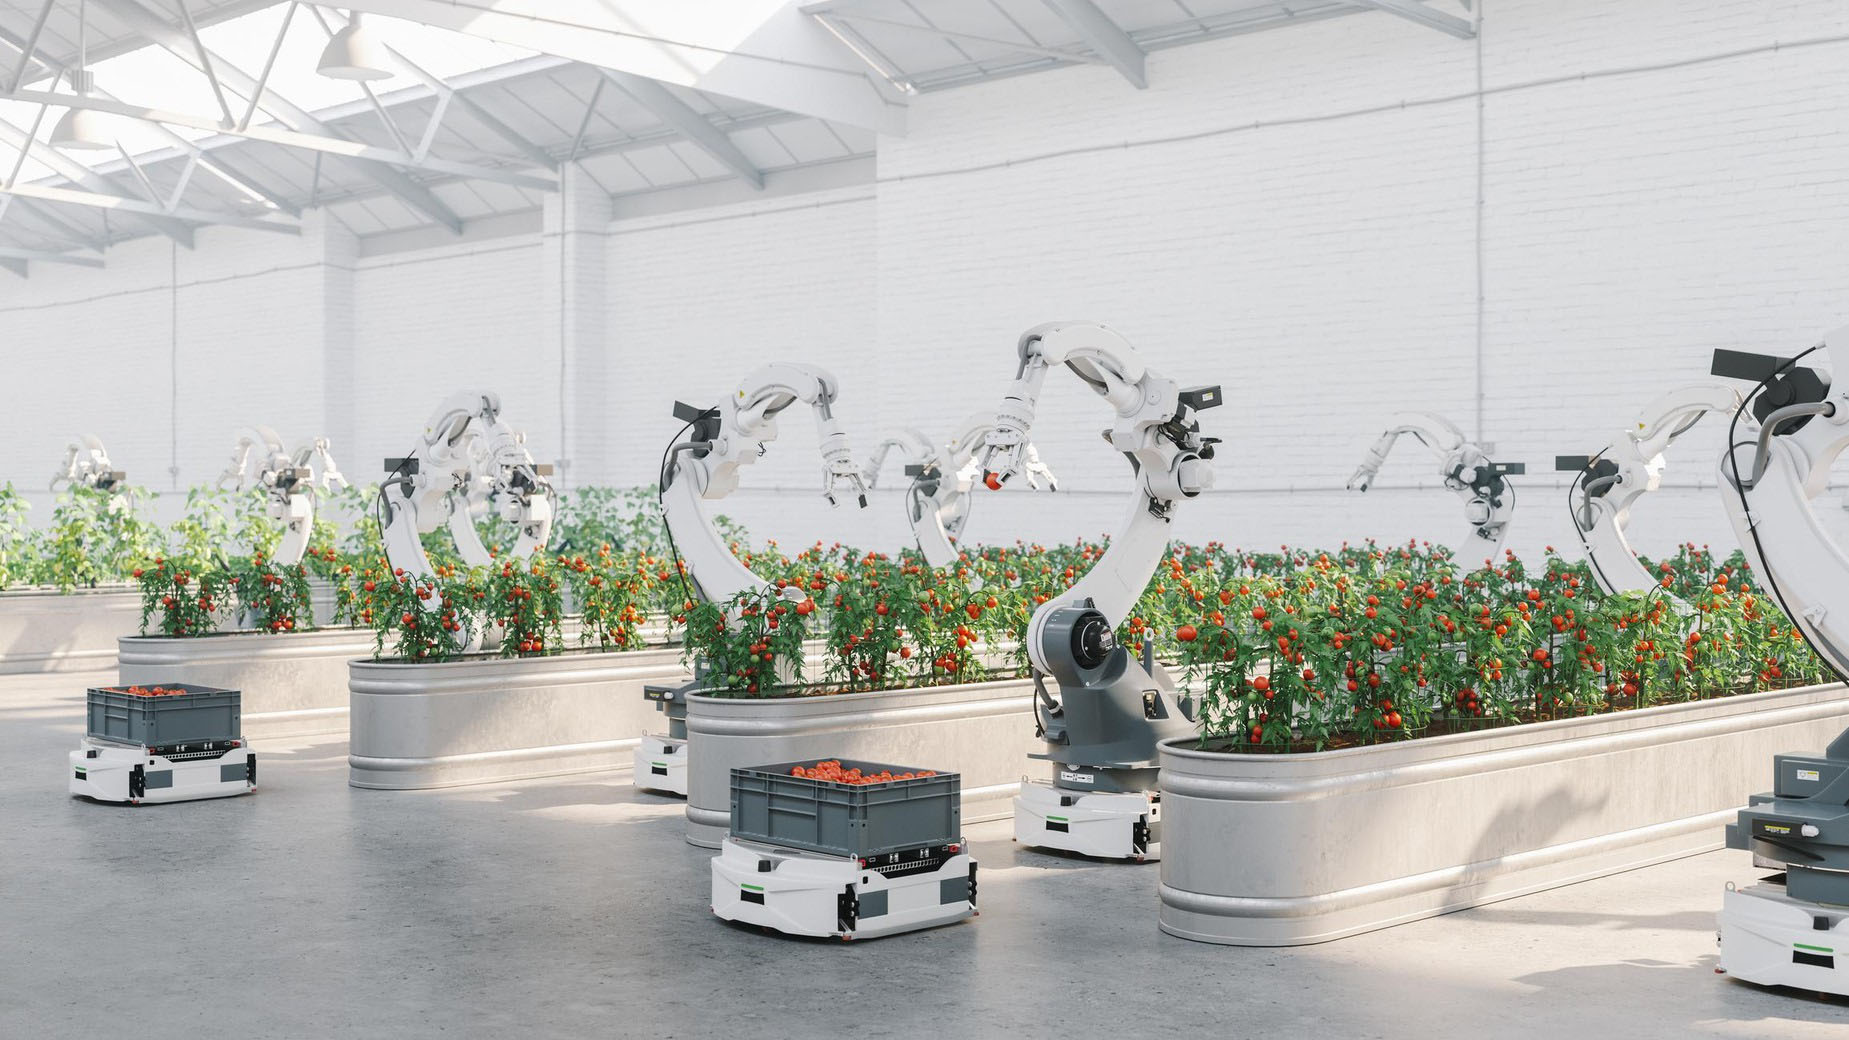 robots harvesting tomatoes